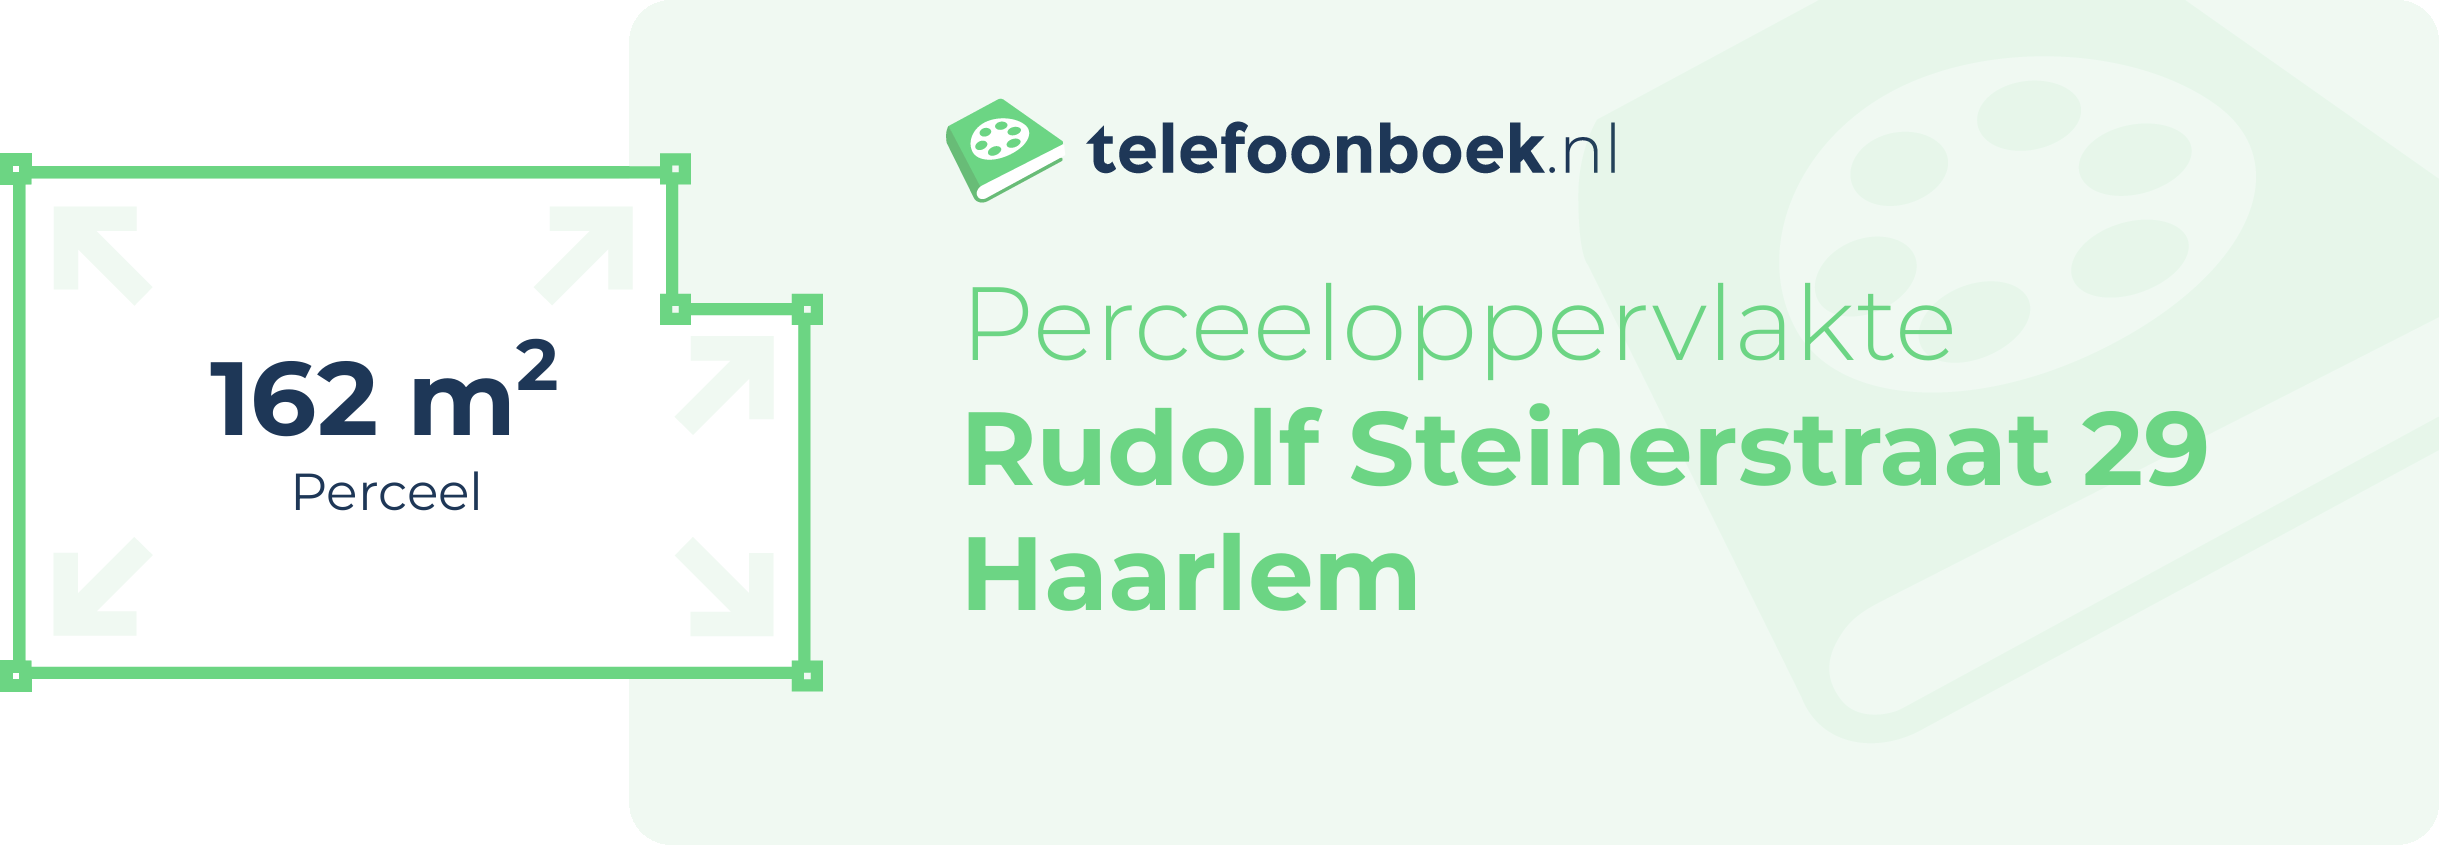 Perceeloppervlakte Rudolf Steinerstraat 29 Haarlem